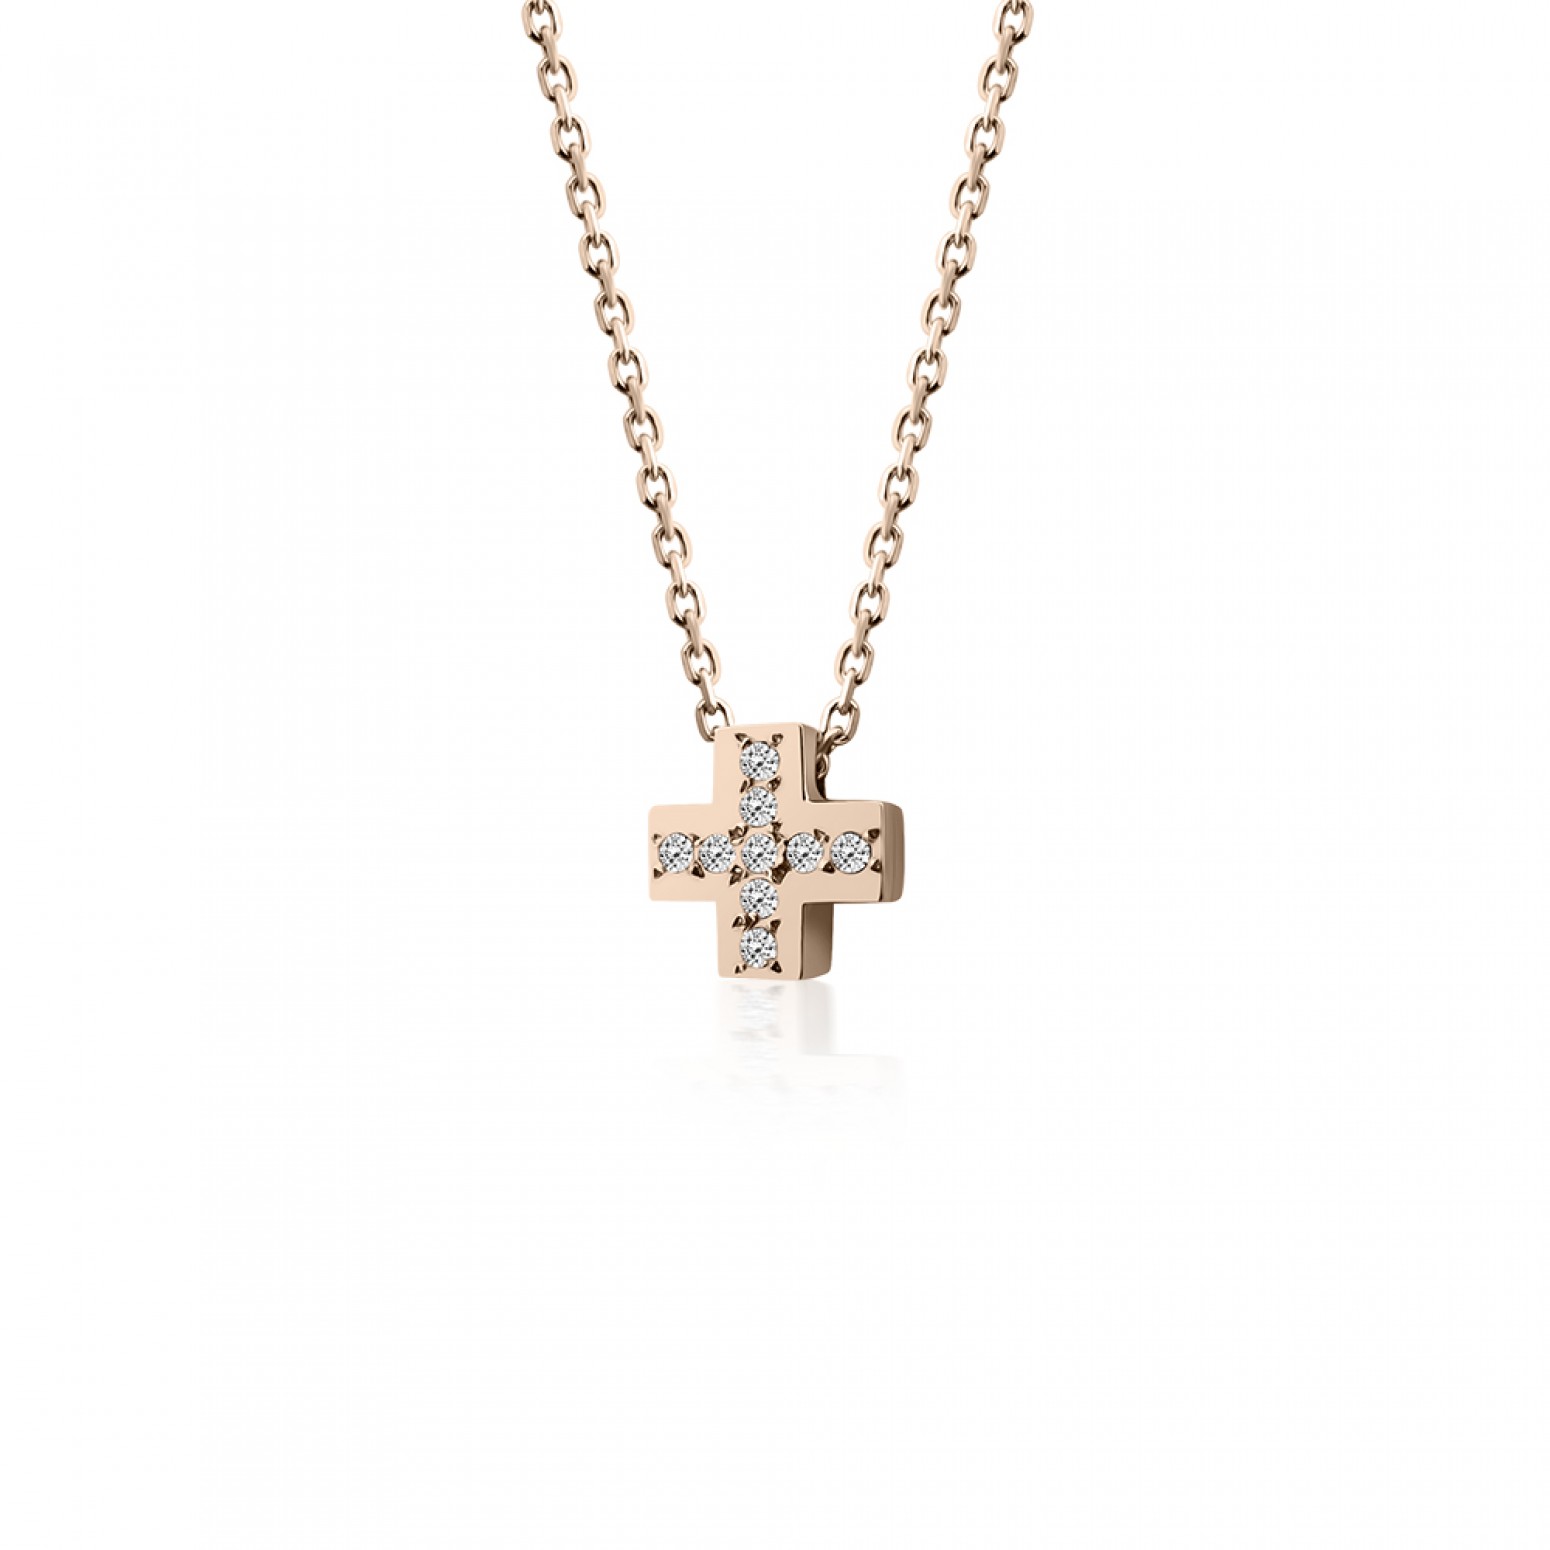 Cross necklace, Κ14 pink gold with zircon, ko5487 NECKLACES Κοσμηματα - chrilia.gr